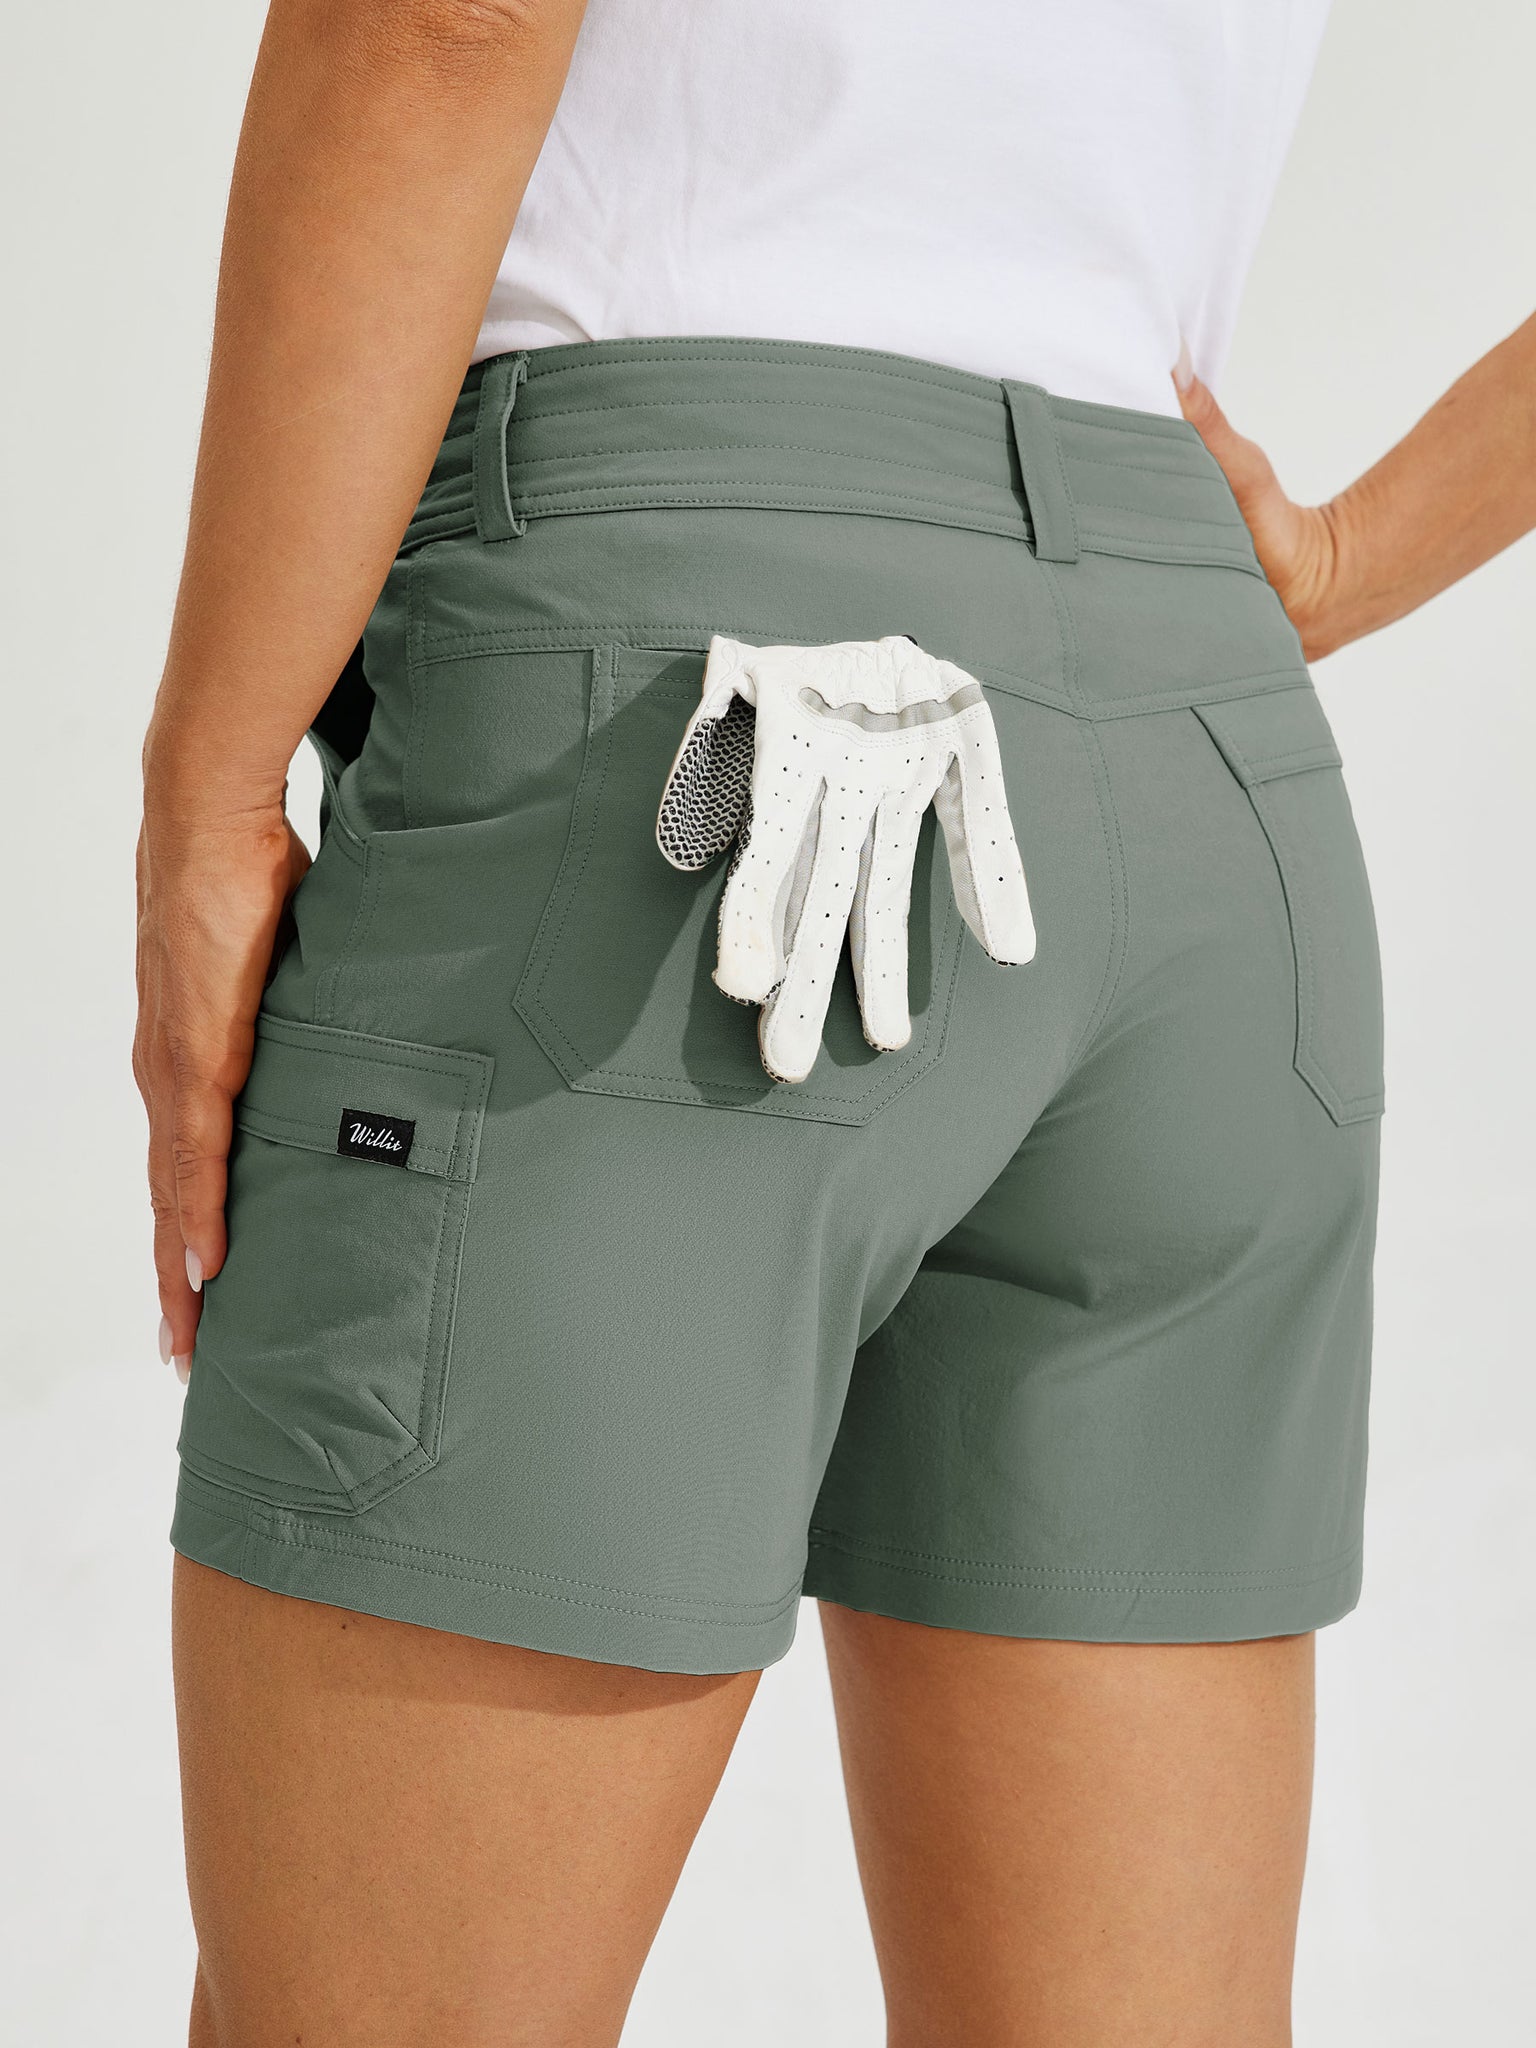 Women's Outdoor Pro Shorts 5Inch_Green2